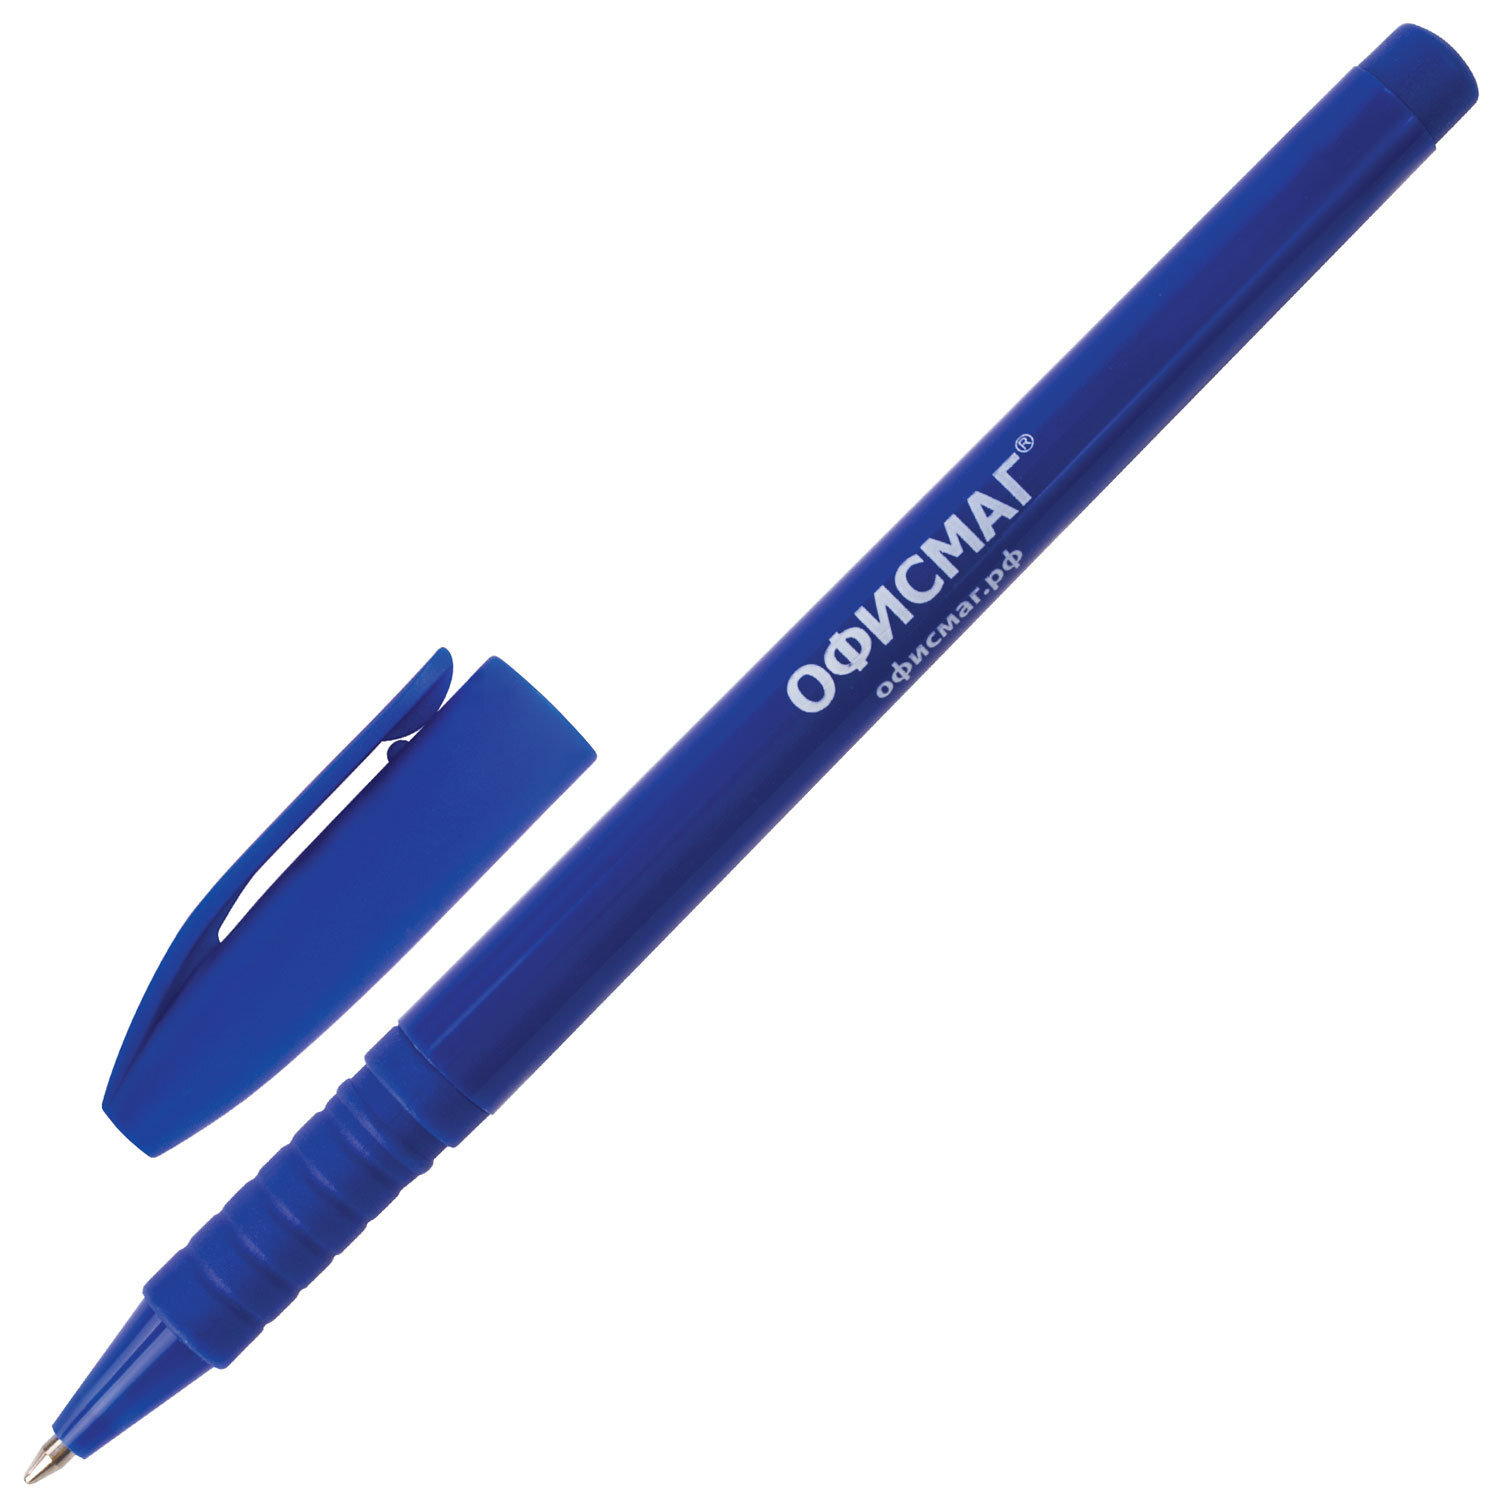 Brauberg 0.7. Ручка шариковая синяя БРАУБЕРГ. Ручка шариковая БРАУБЕРГ 0.7. Ручка шариковая масляная БРАУБЕРГ Марине синяя. Ручка шариковая БРАУБЕРГ 0.7 мм.